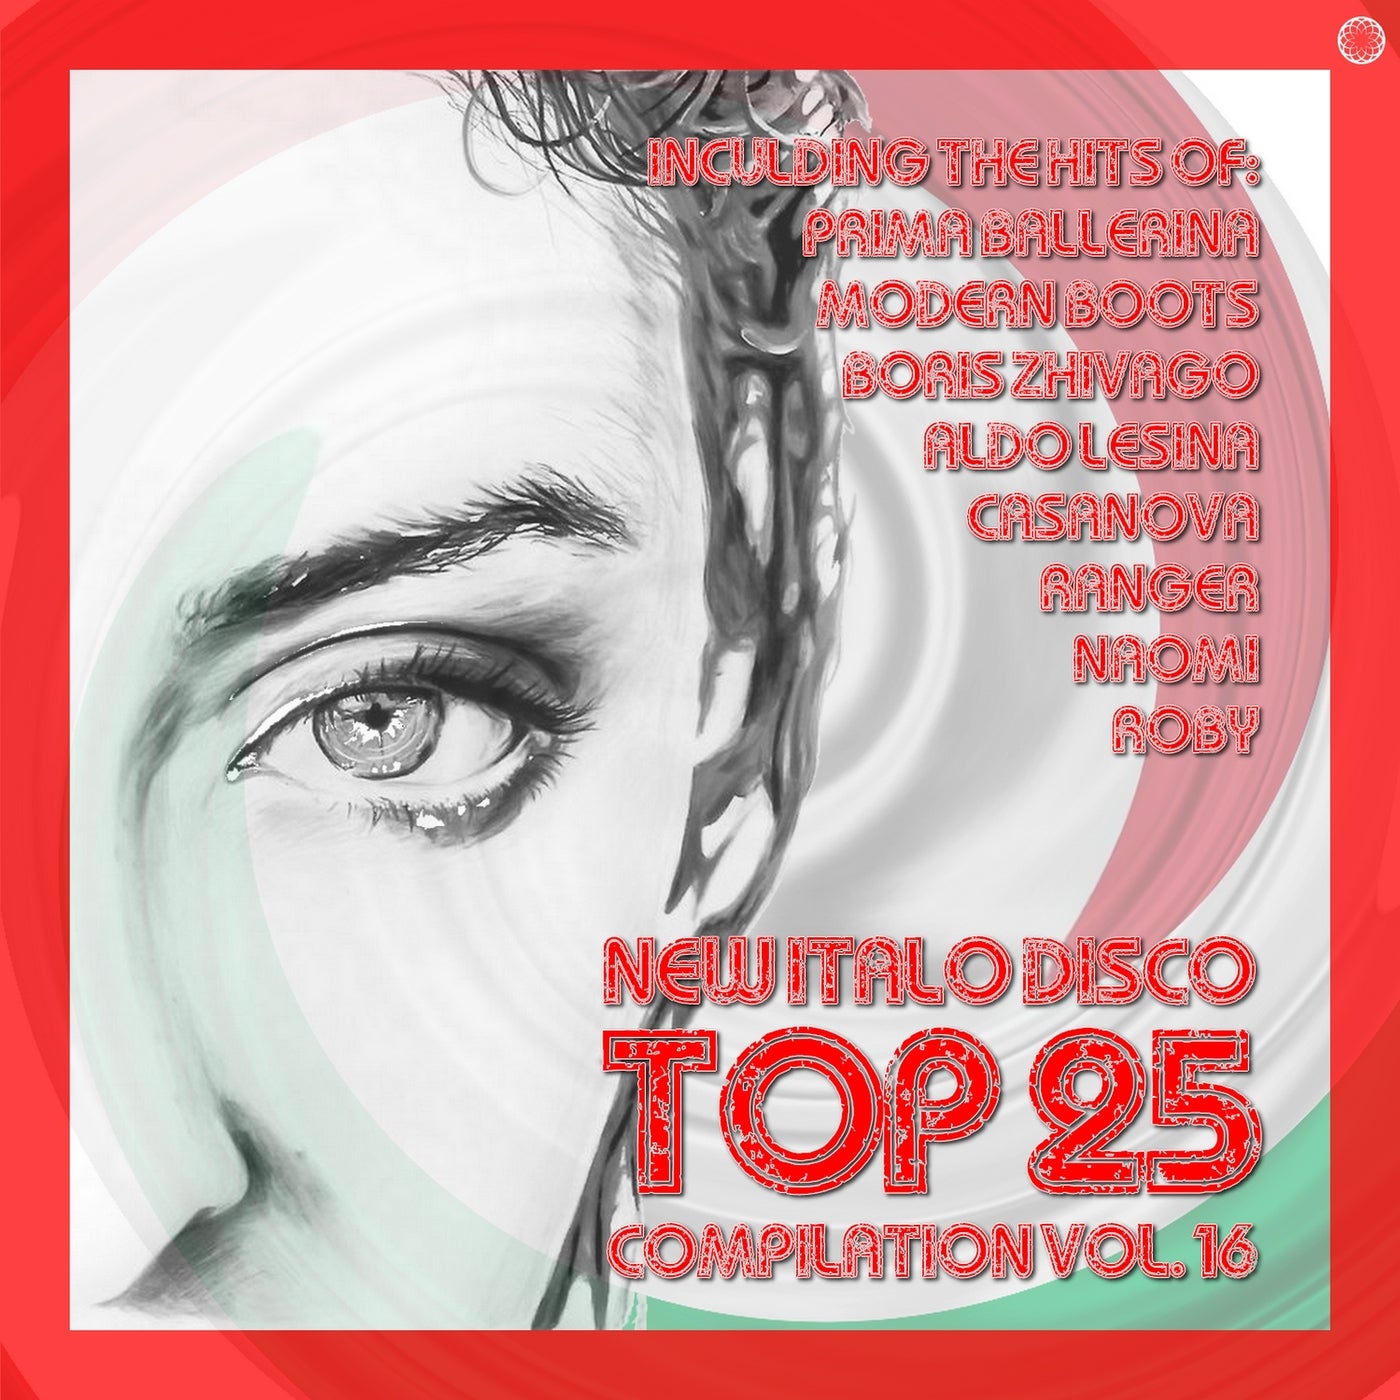 New Italo Disco Top 25 Compilation, Vol. 16